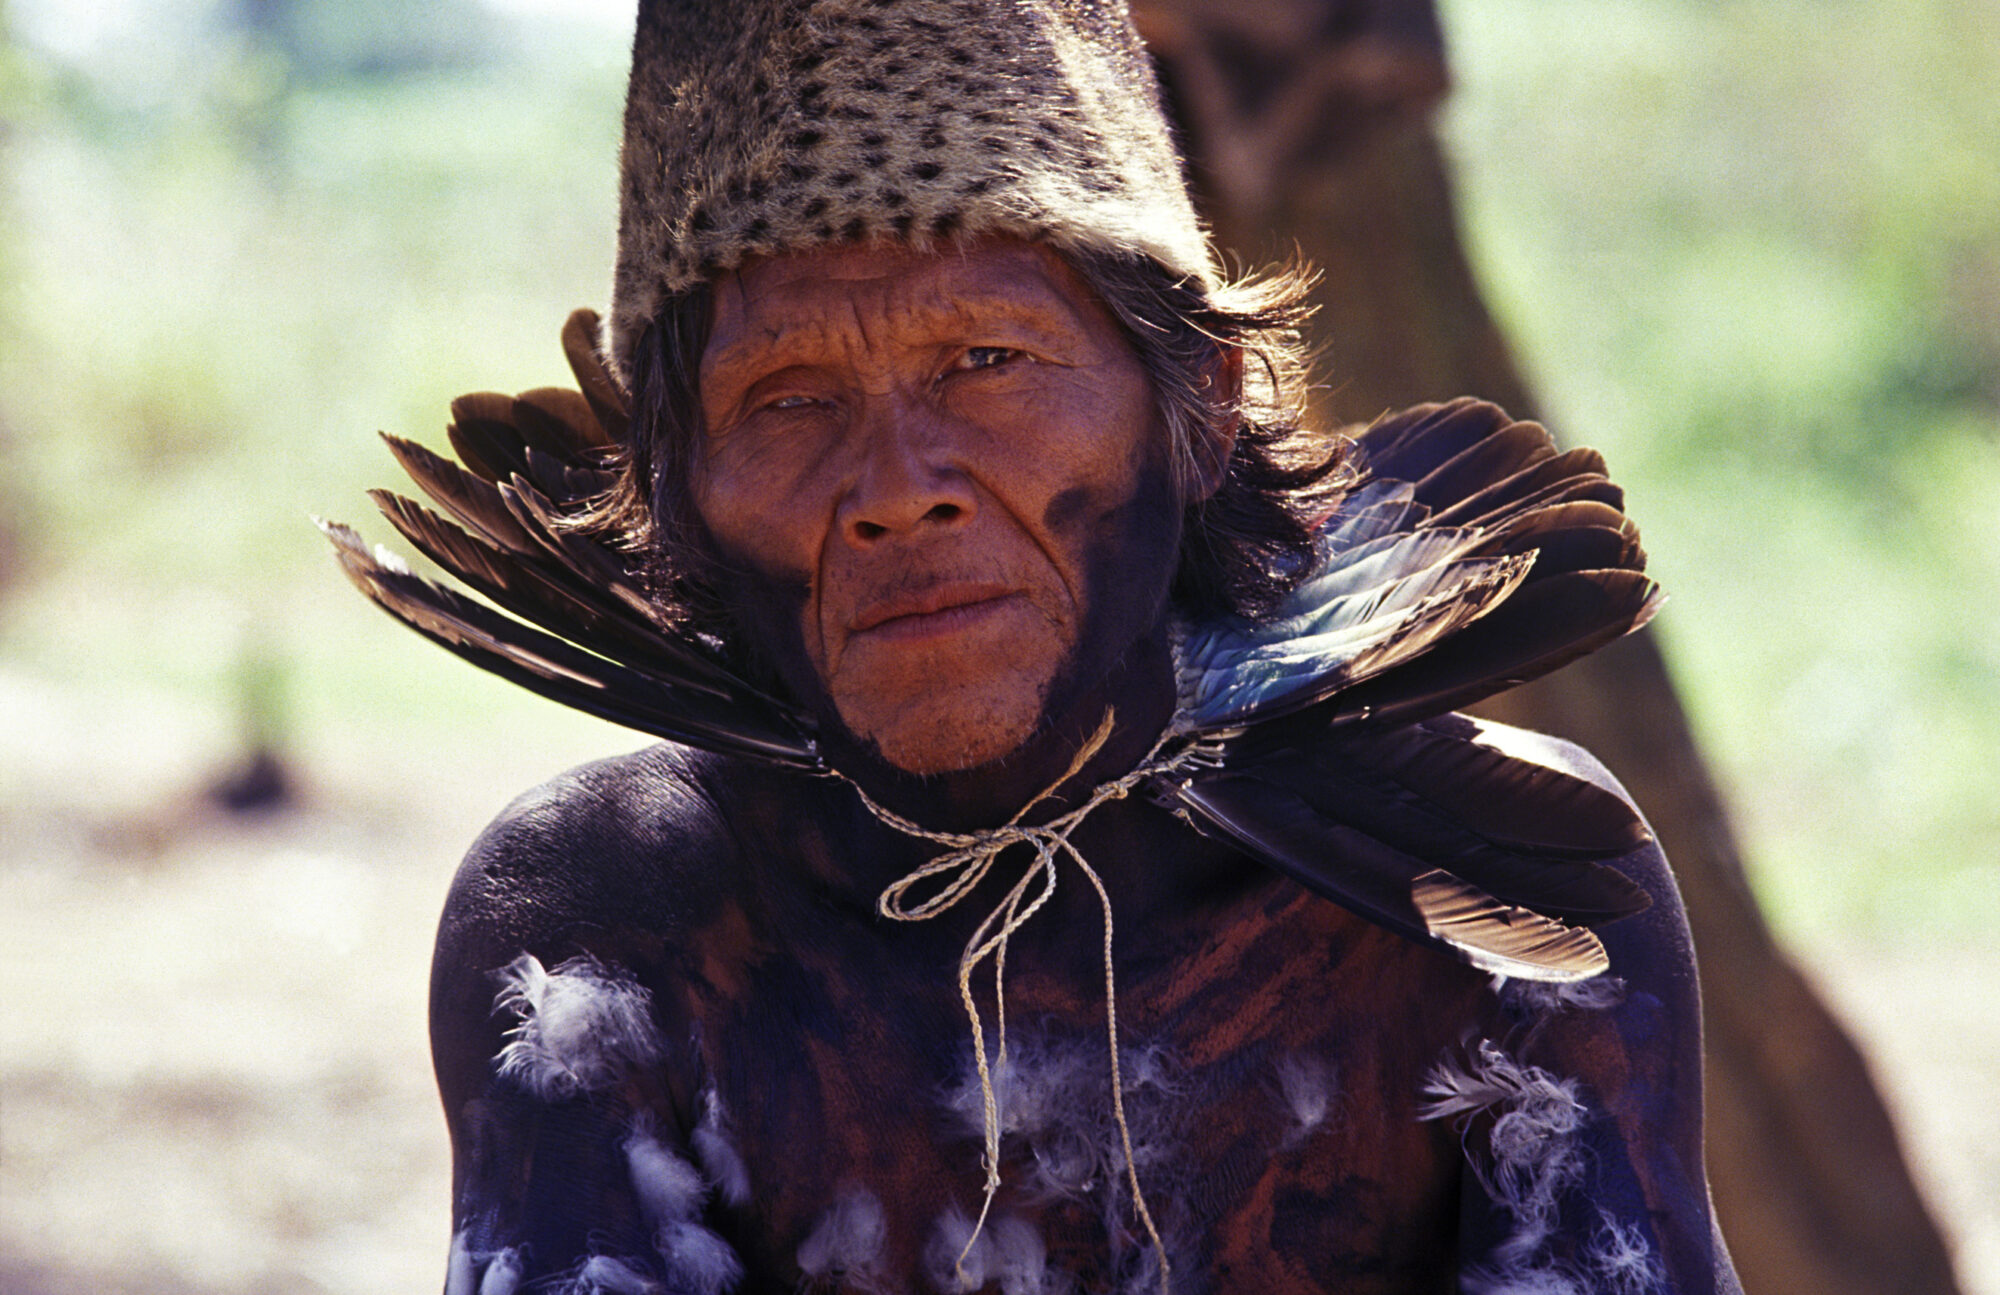 <p>Nas últimas décadas, o povo Ayoreo foi forçado a deixar suas terras ancestrais, mas 150 membros permaneceram sem contato (Imagem: <a href="https://www.flickr.com/photos/136885922@N06/22895340351/in/photolist-ATbB2r-ATbDr6-6yRR9D-6AXUNX-AScEqi-AgxPgZ-6DhagZ-6DmetQ-6Dmgpj-fhBLoa-Ff3KC-6BSKJs-fhS31u-6BSKJL-5Qq882-cJsxgb-ej3W17-tiL2L-6Dhddc-6BSKKo-6Dhbup-atQGBr-atQGh6-atQHi4-2fxuidF-K2heiW-oZybVt-RM5kn4-Xo1wpm-FffMH-8pah12-FfbJL-FmCfv-FmwW1-Ff5bS-5zg59T-54Z6GB-cJsB4E-vtj3rn-atQHSM-atQGWc-FfbHS-FmwVW-5zg4Hv-553Vz3-Ff5cL-Ff5cw-Ff5cd-Ff3Mh-Ffgsy">Fotografías Nuevas</a> / <a href="https://www.flickr.com/people/136885922@N06/">Flickr</a>, <a href="https://creativecommons.org/publicdomain/mark/1.0/">PD</a>)</p>